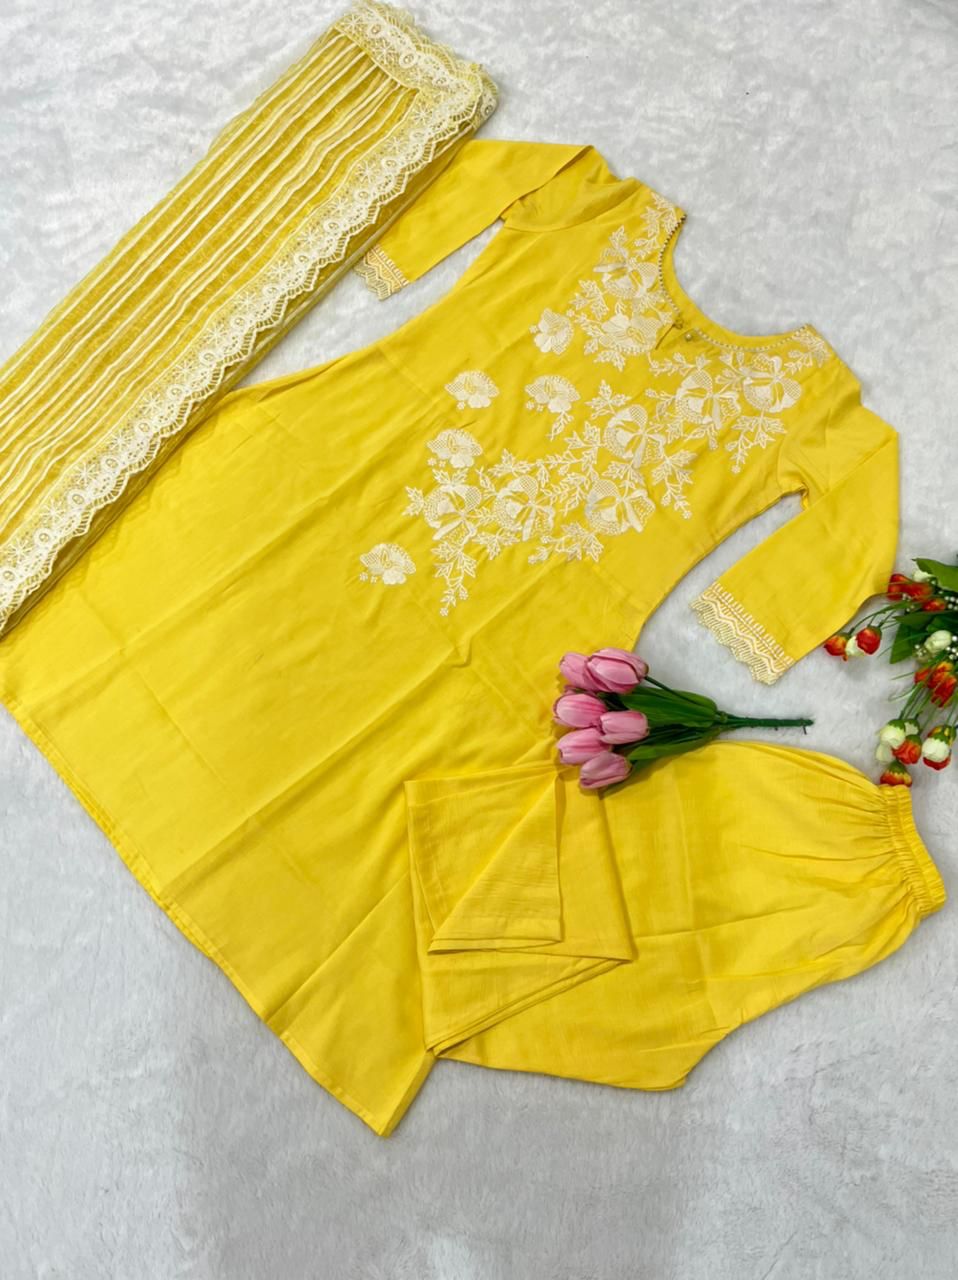 Buy Yellow color lucknowi style kurta set for stylish look